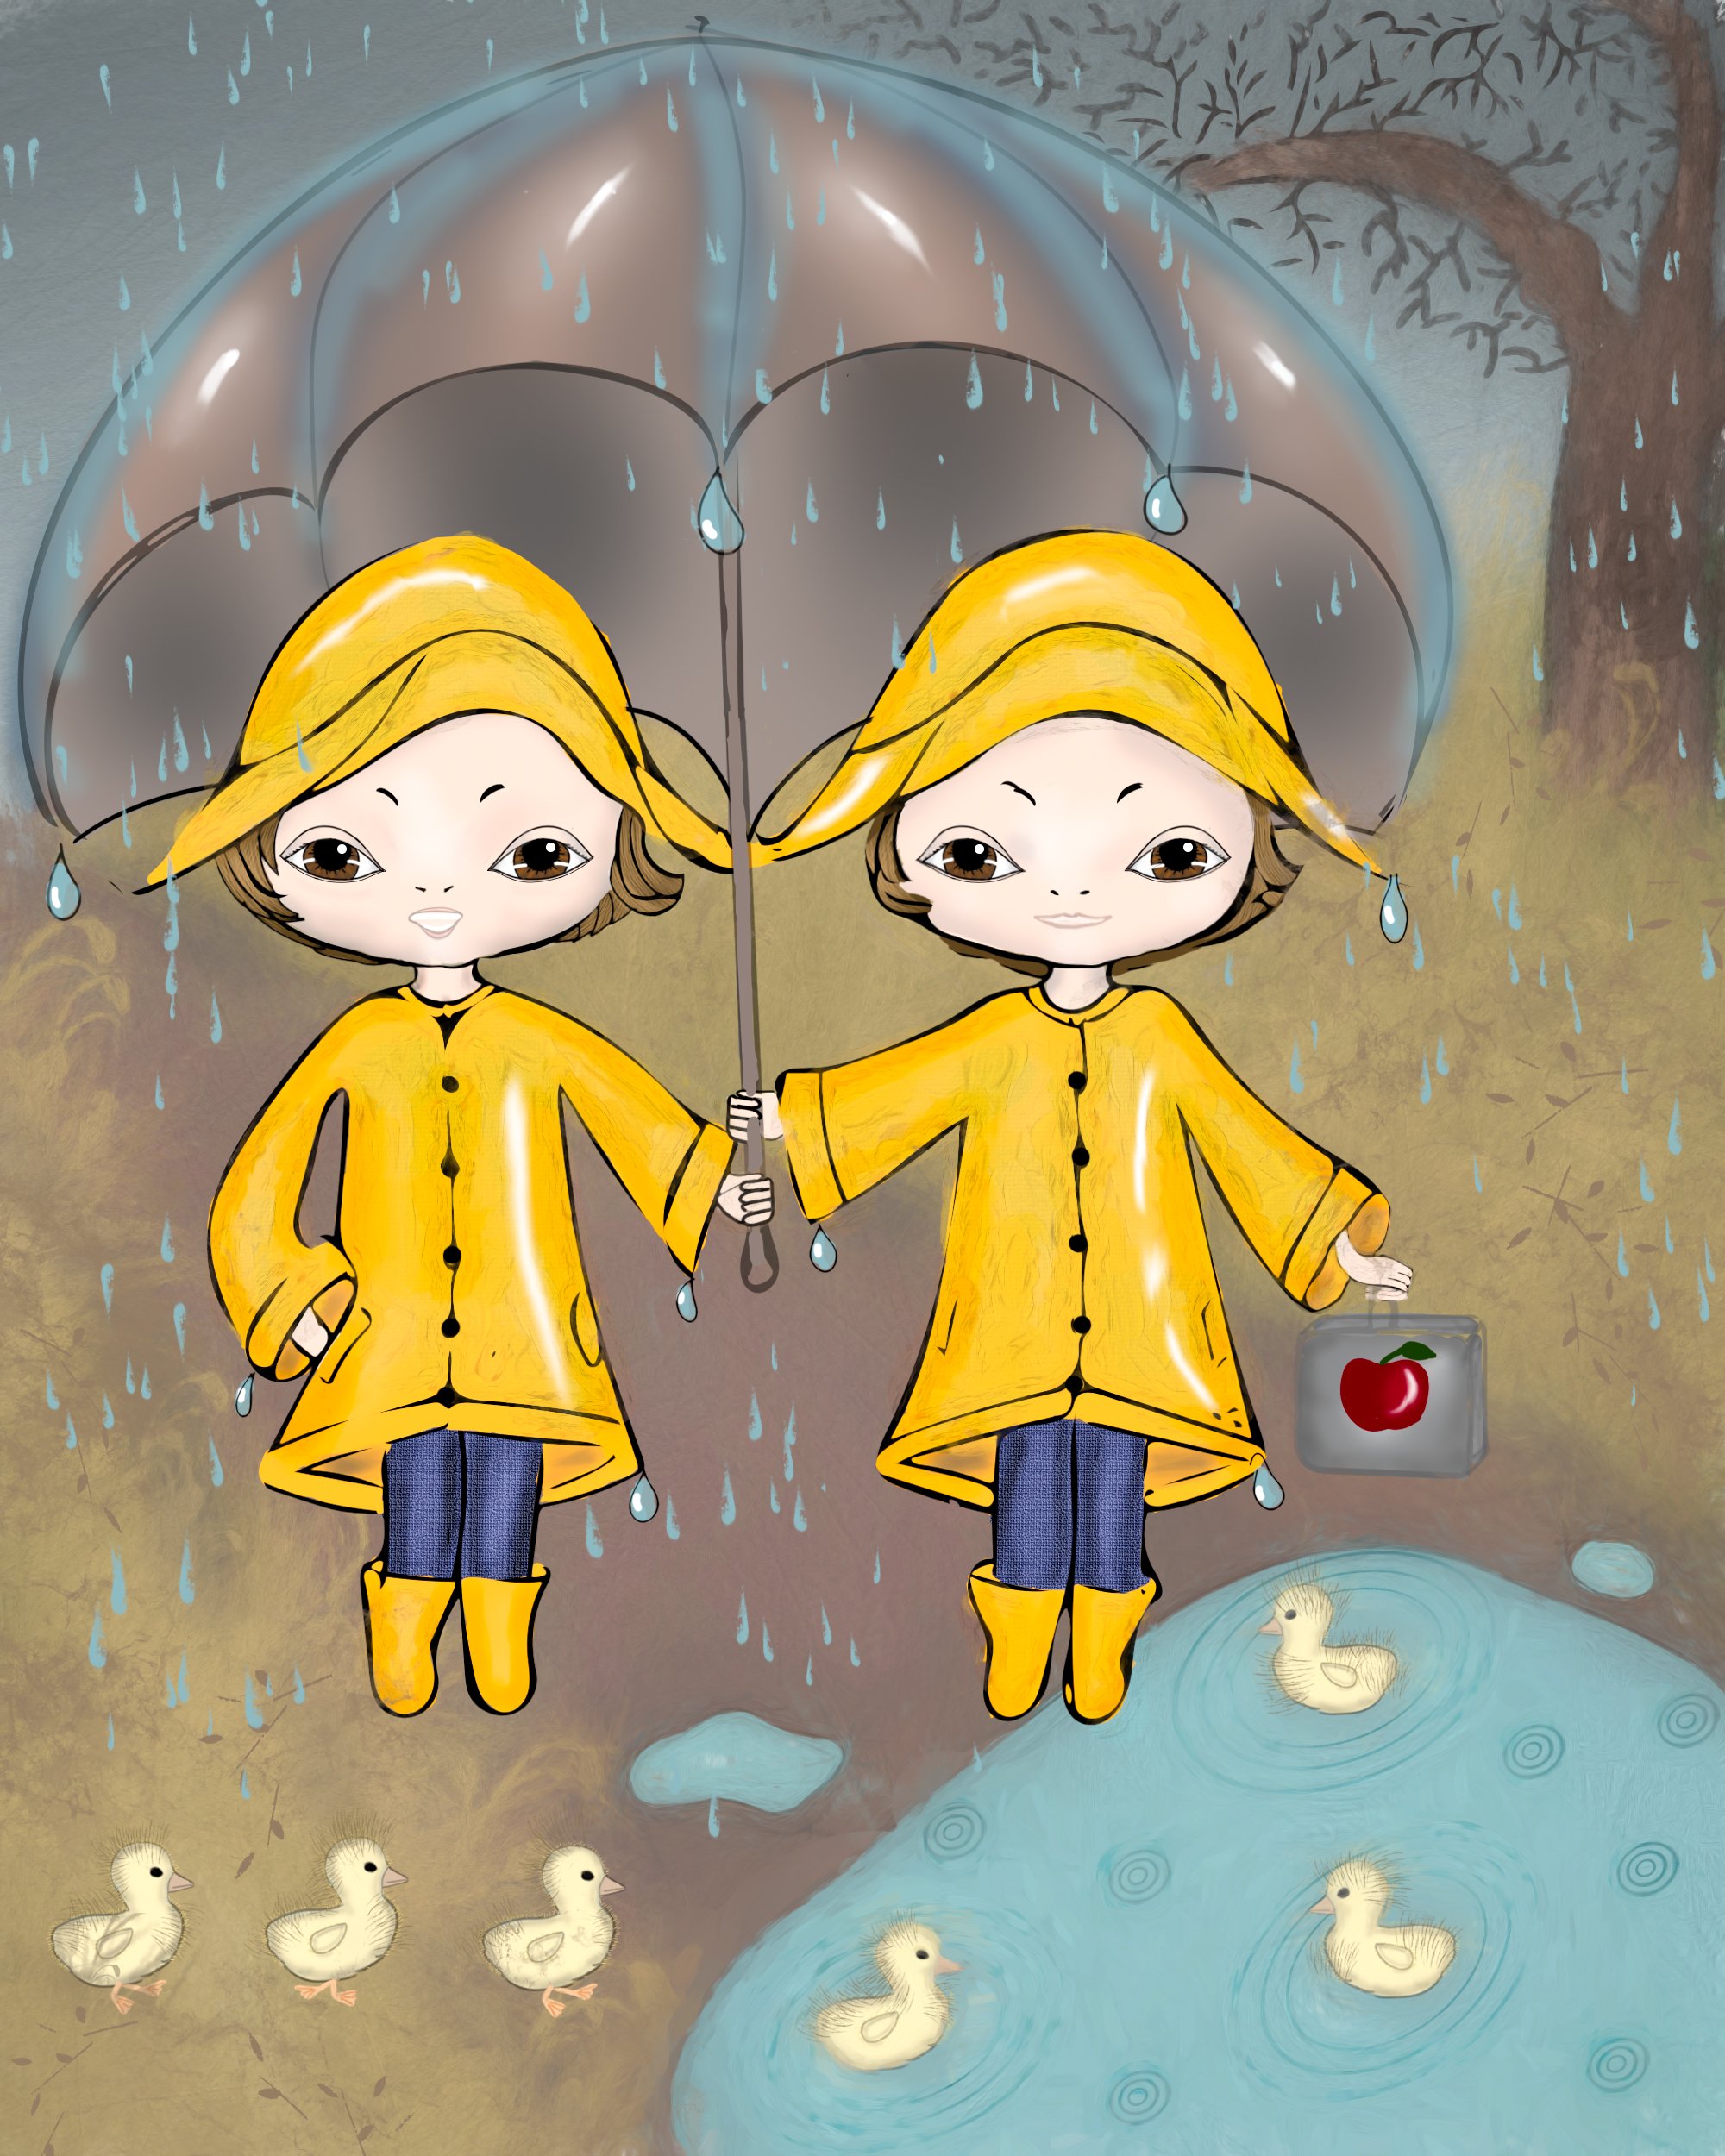 illustration_twins_boys_rain_umbrella_FINAL_v2.jpg